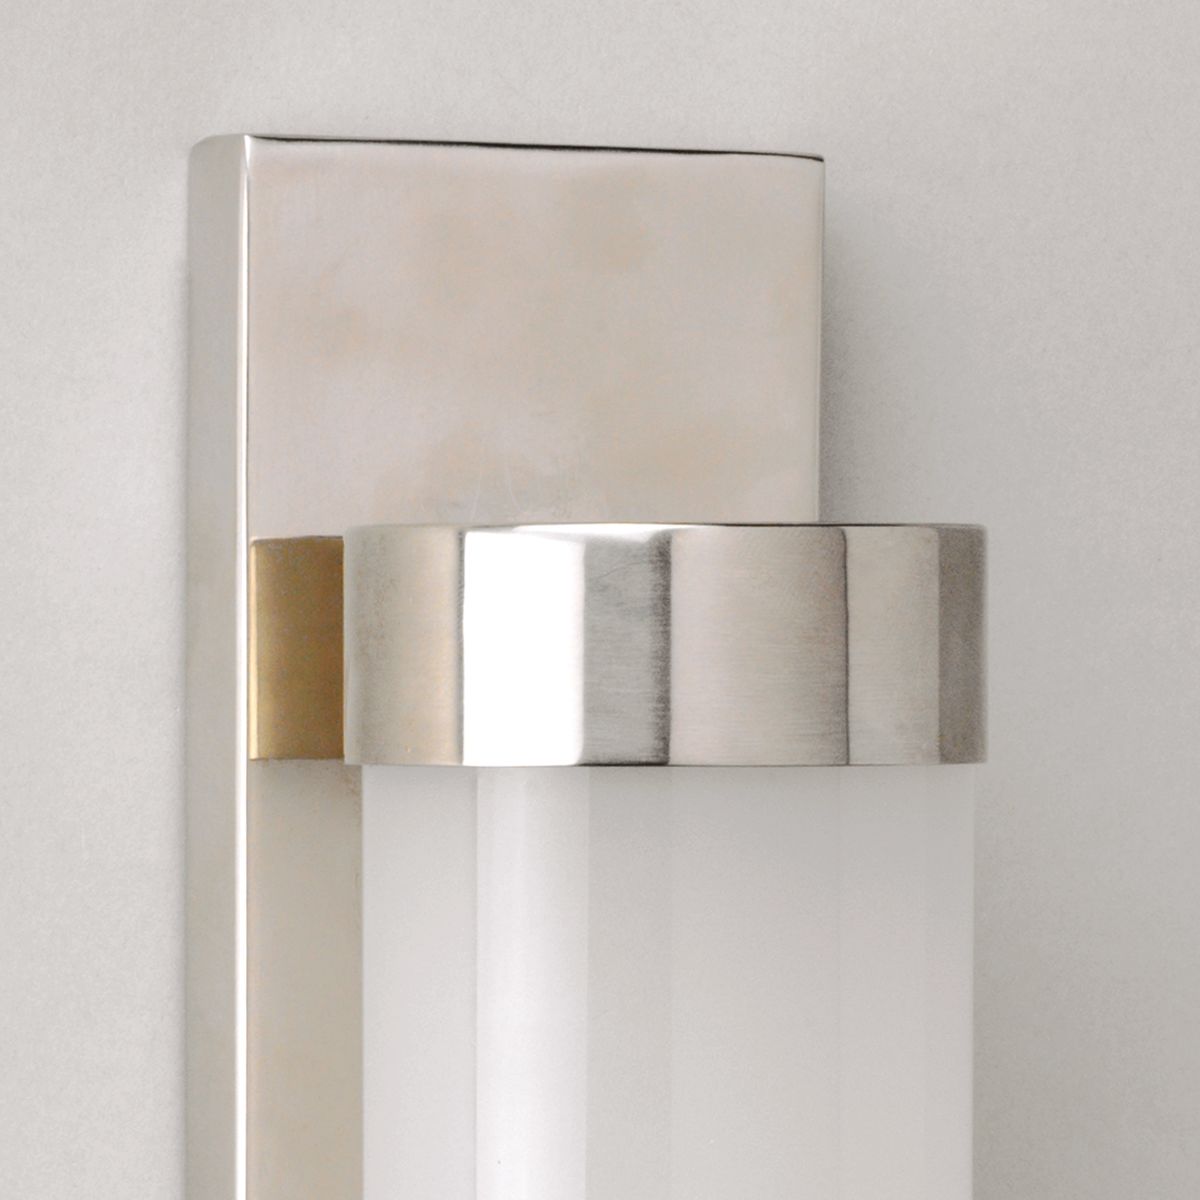 Art Deco bathroom wall light in nickel detail